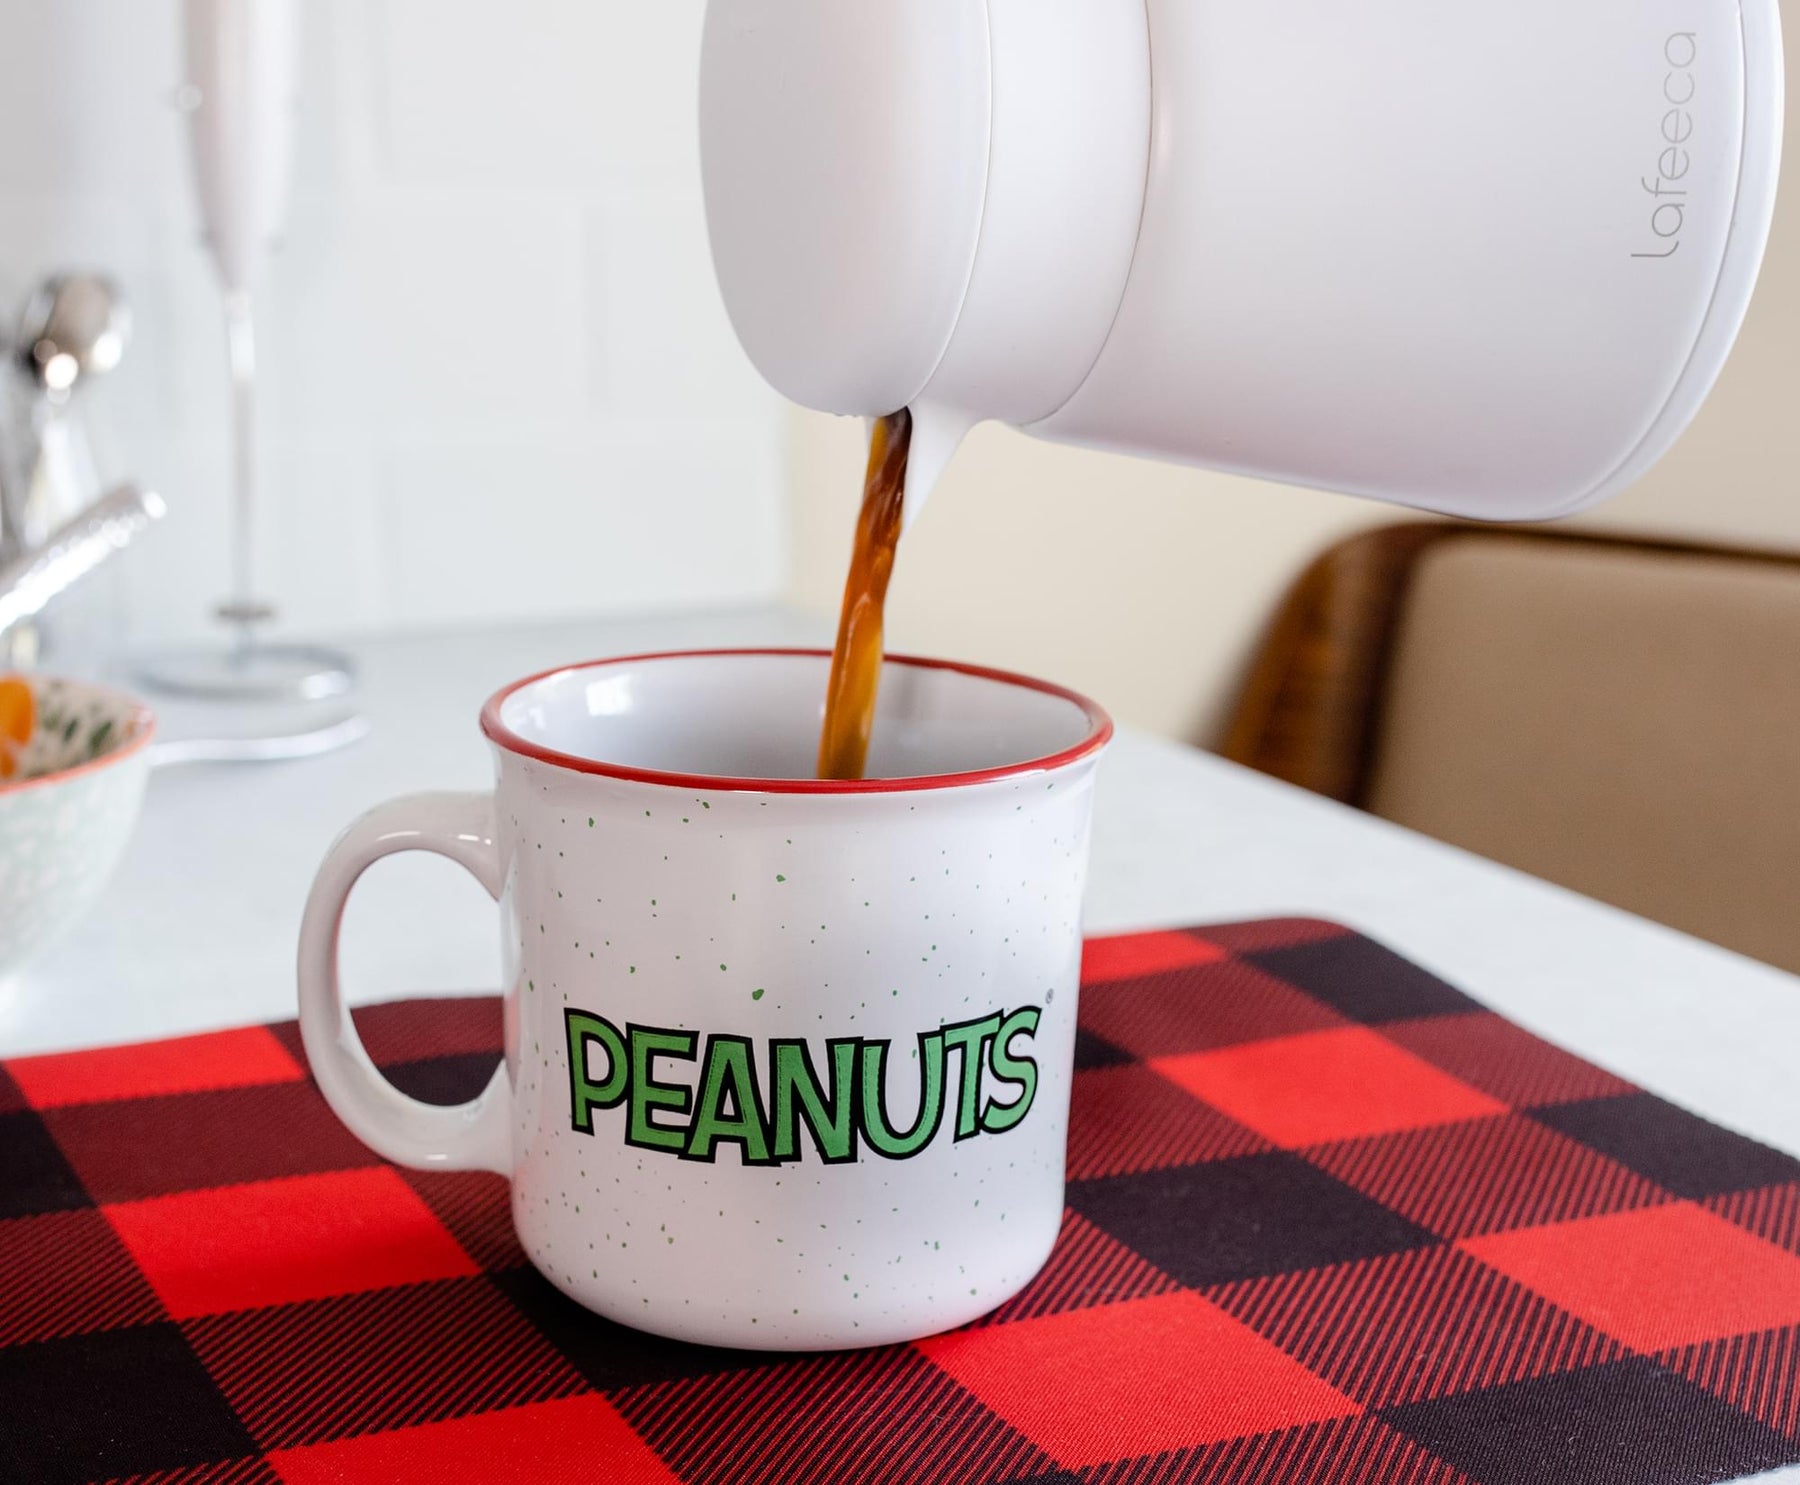 Peanuts Snoopy "Tis the Season" Ceramic Camper Mug | Holds 20 Ounces